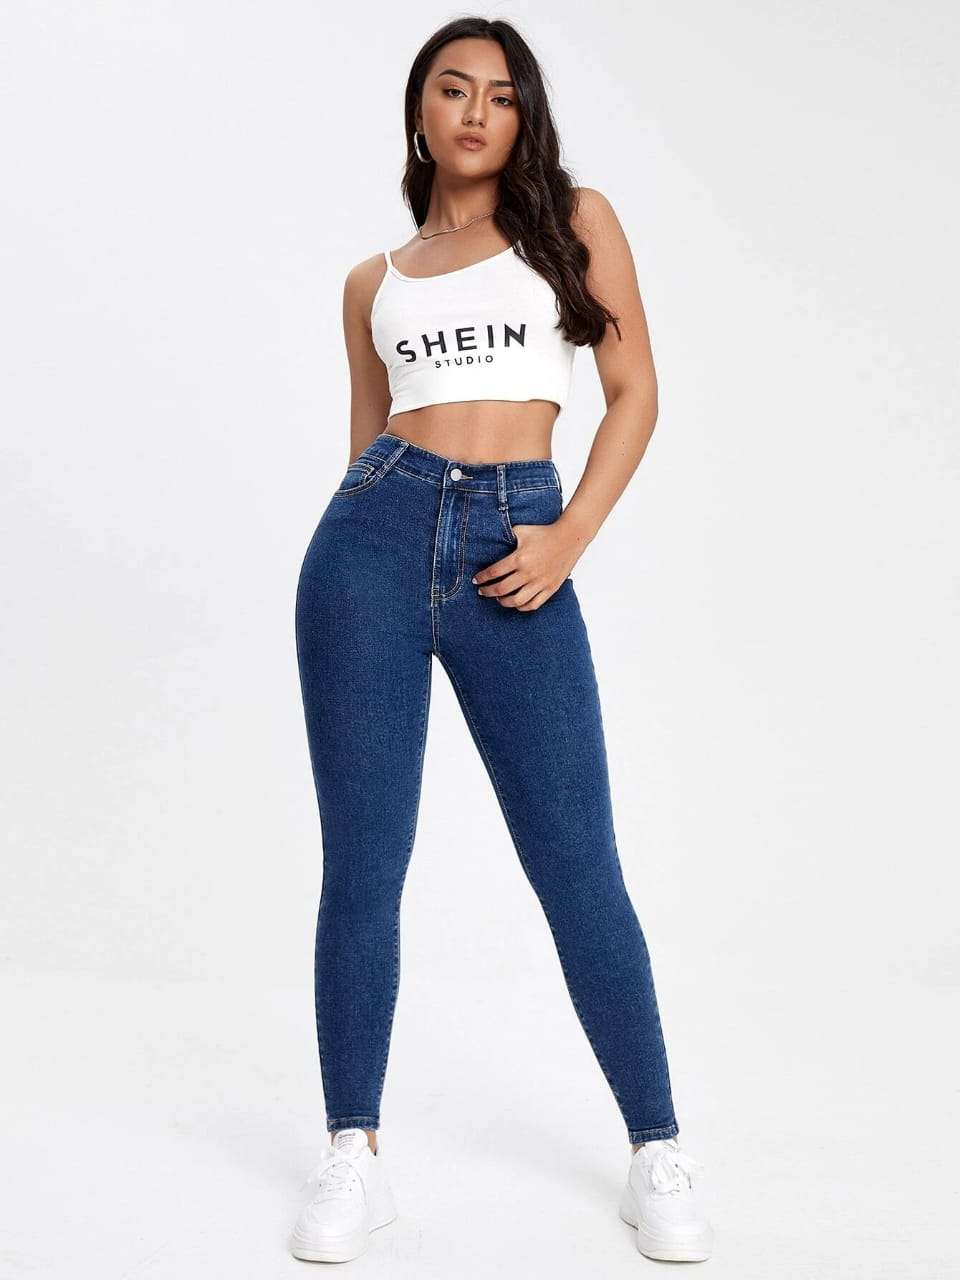 denim 1 button high waist jeans pattern 1 button high waist jeans fabric denim stretchable fabric skin tight stylish girlish jeans  